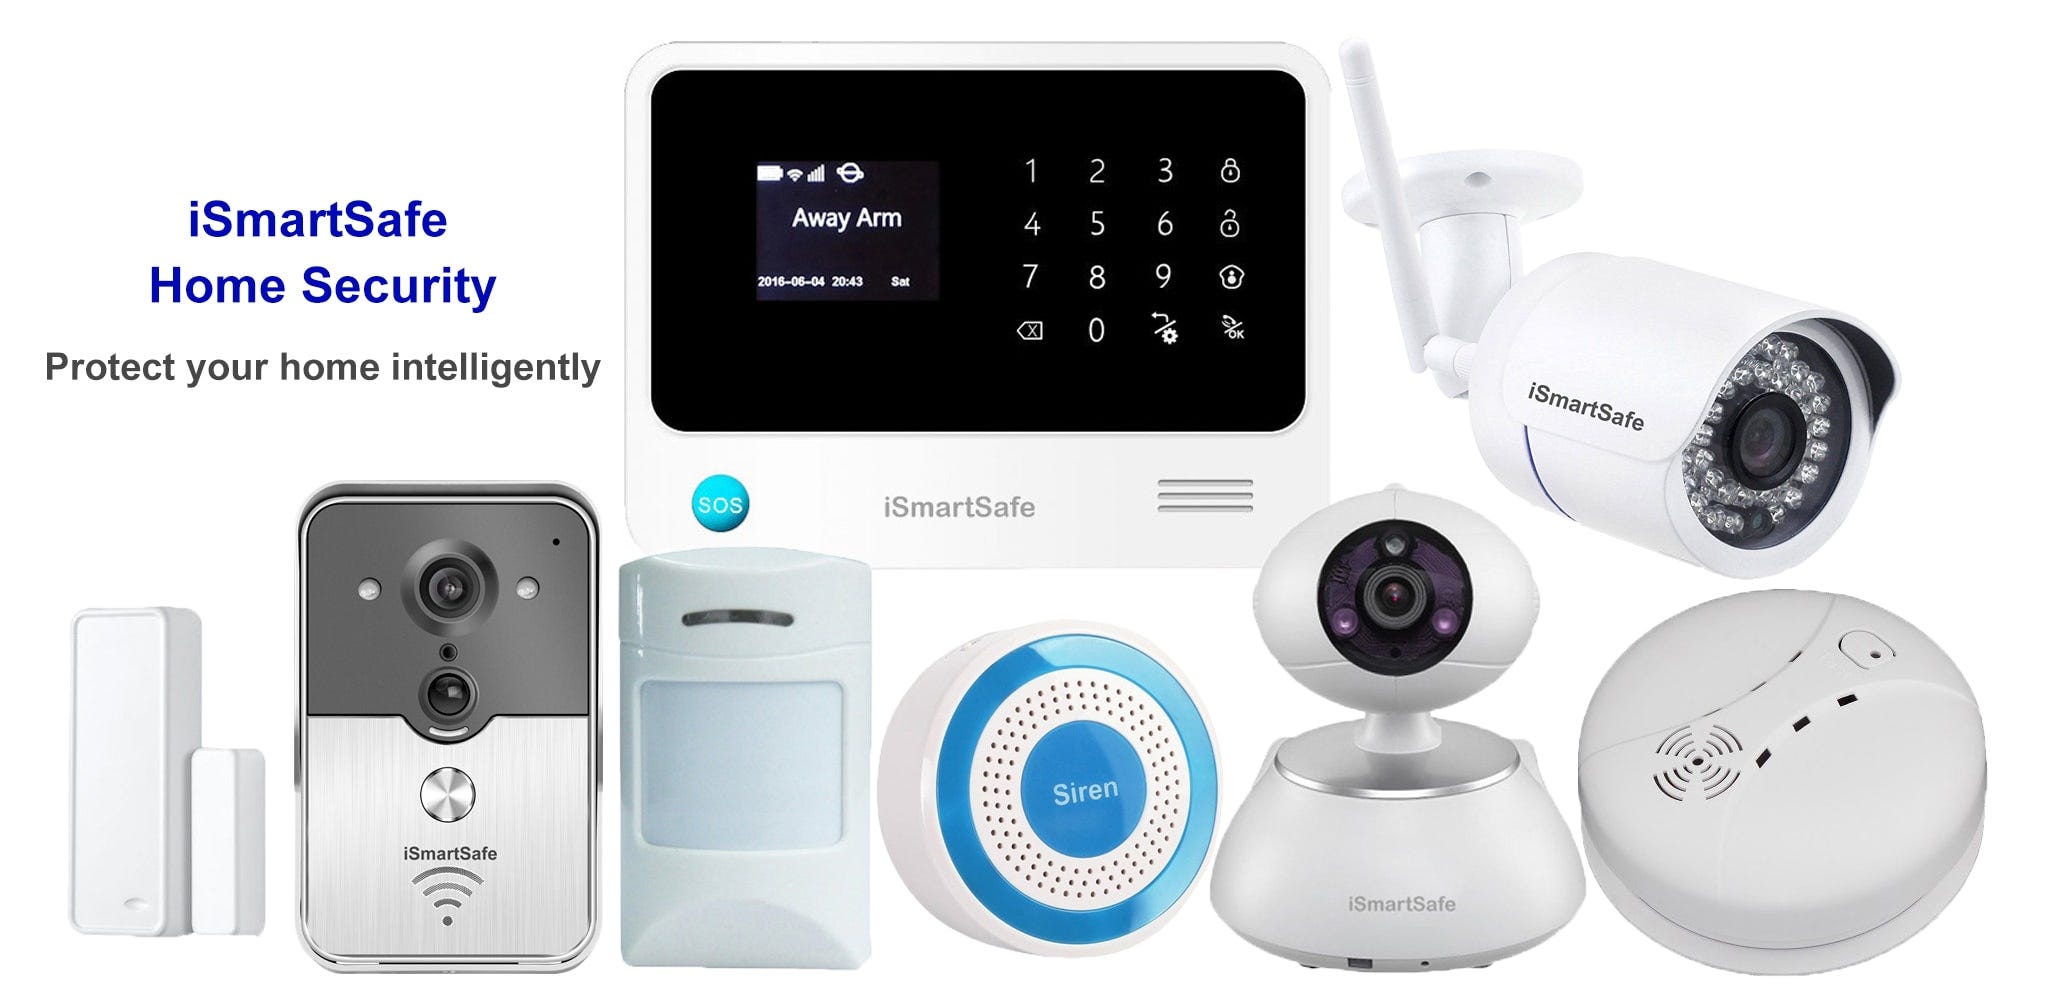 Best Diy Home Security Camera System on Sale - www.bridgepartnersllc.com  1692487525